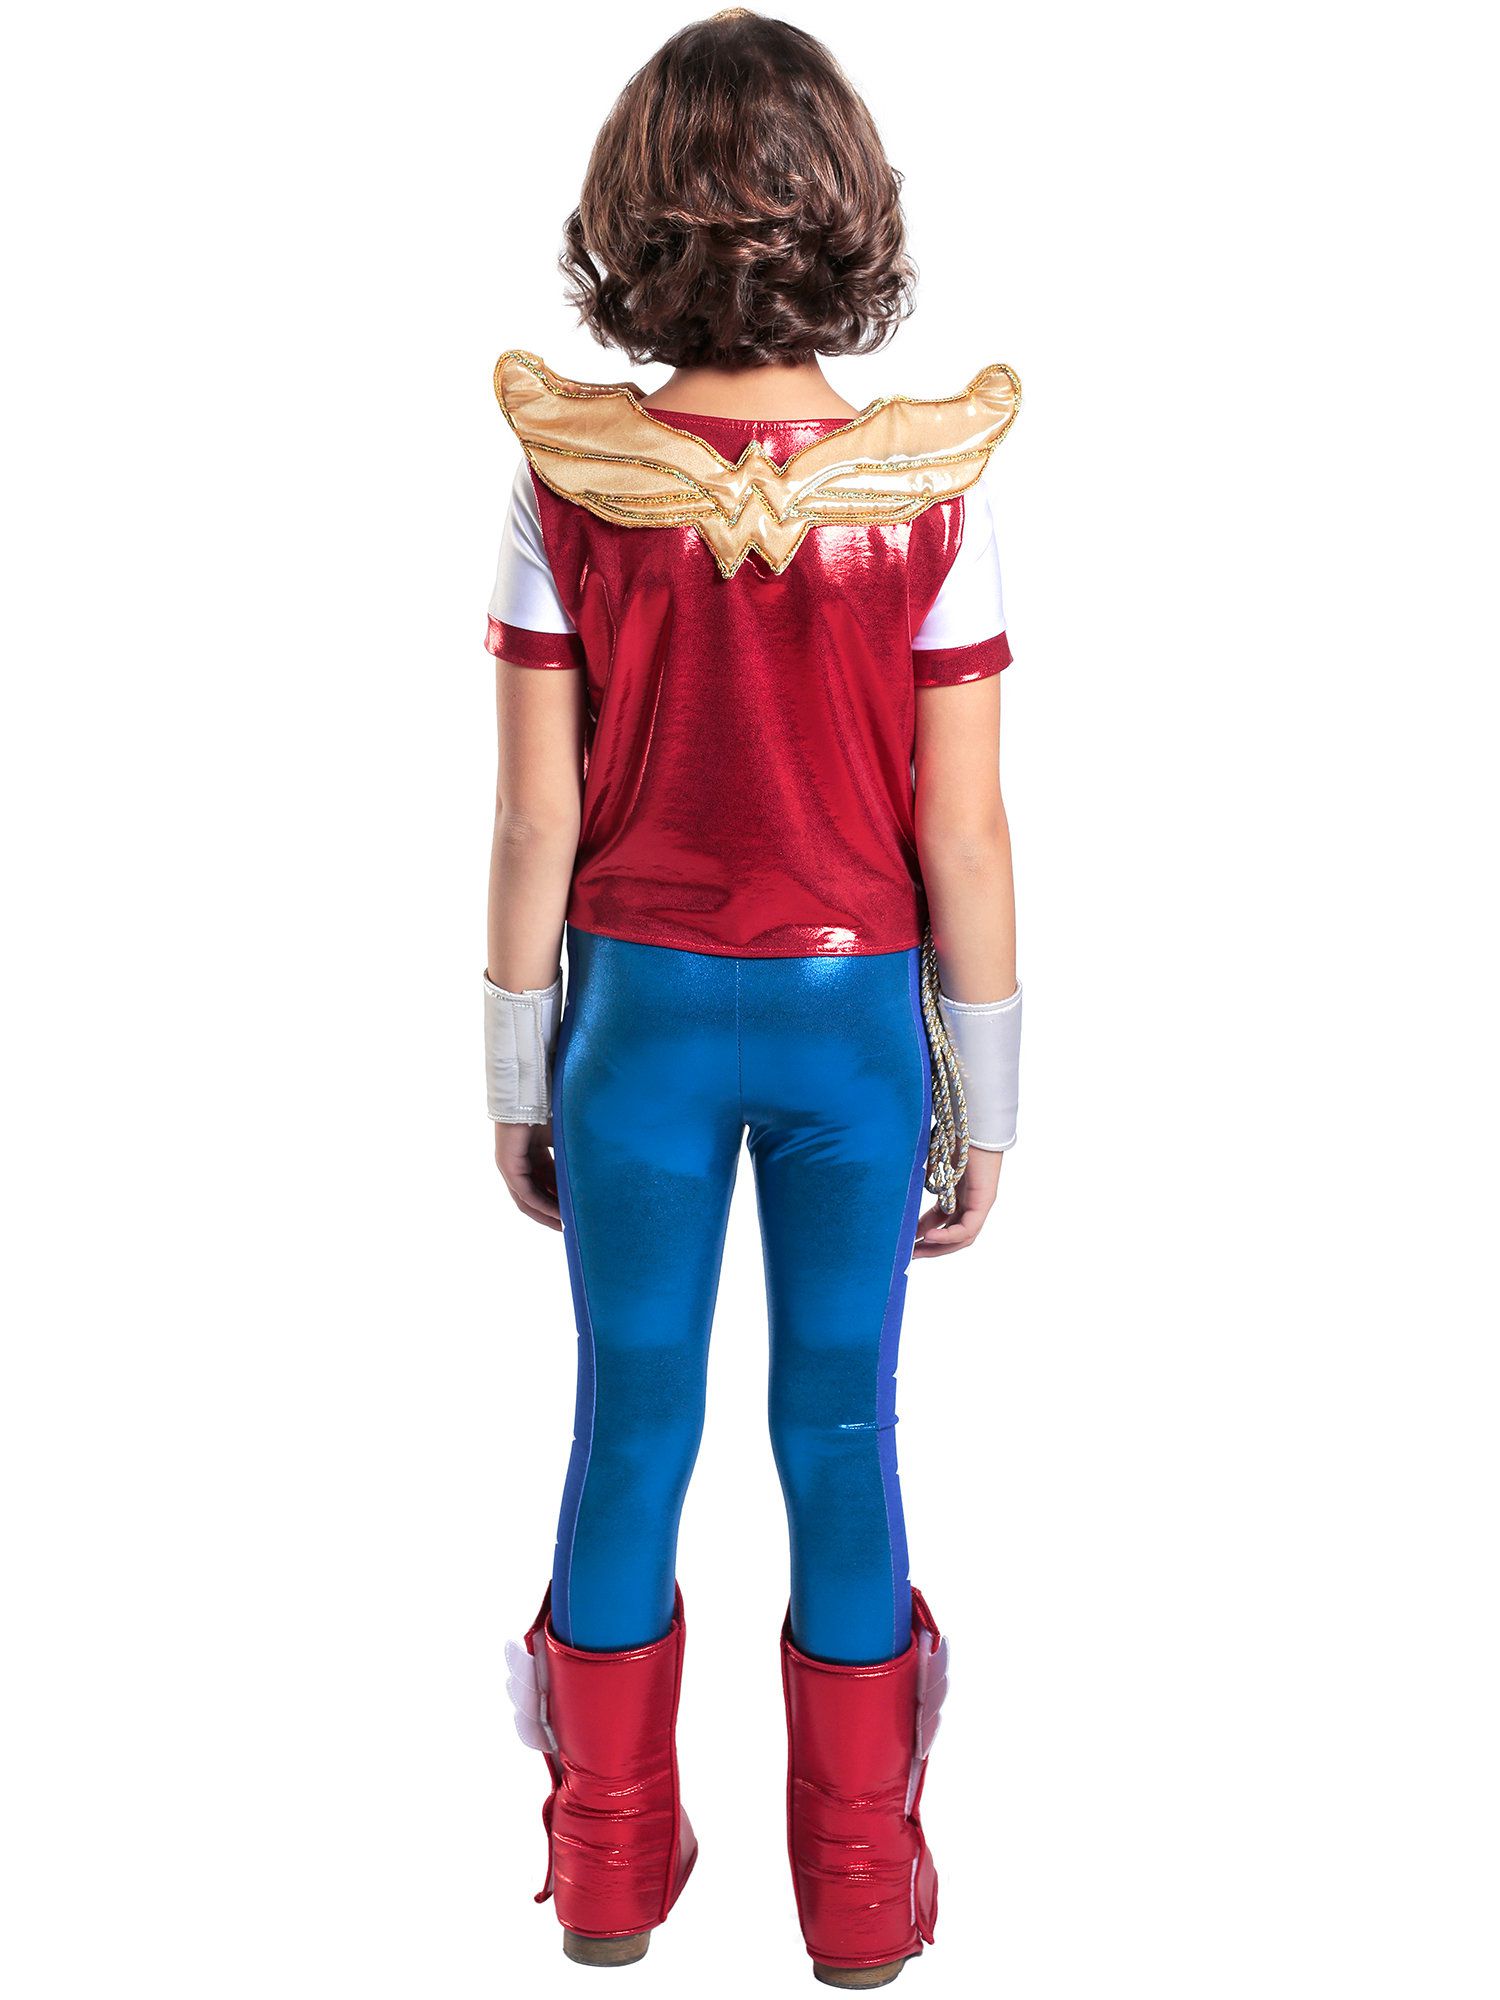 Kid's DC Superhero Girls Wonder Woman Deluxe Costume - costumes.com